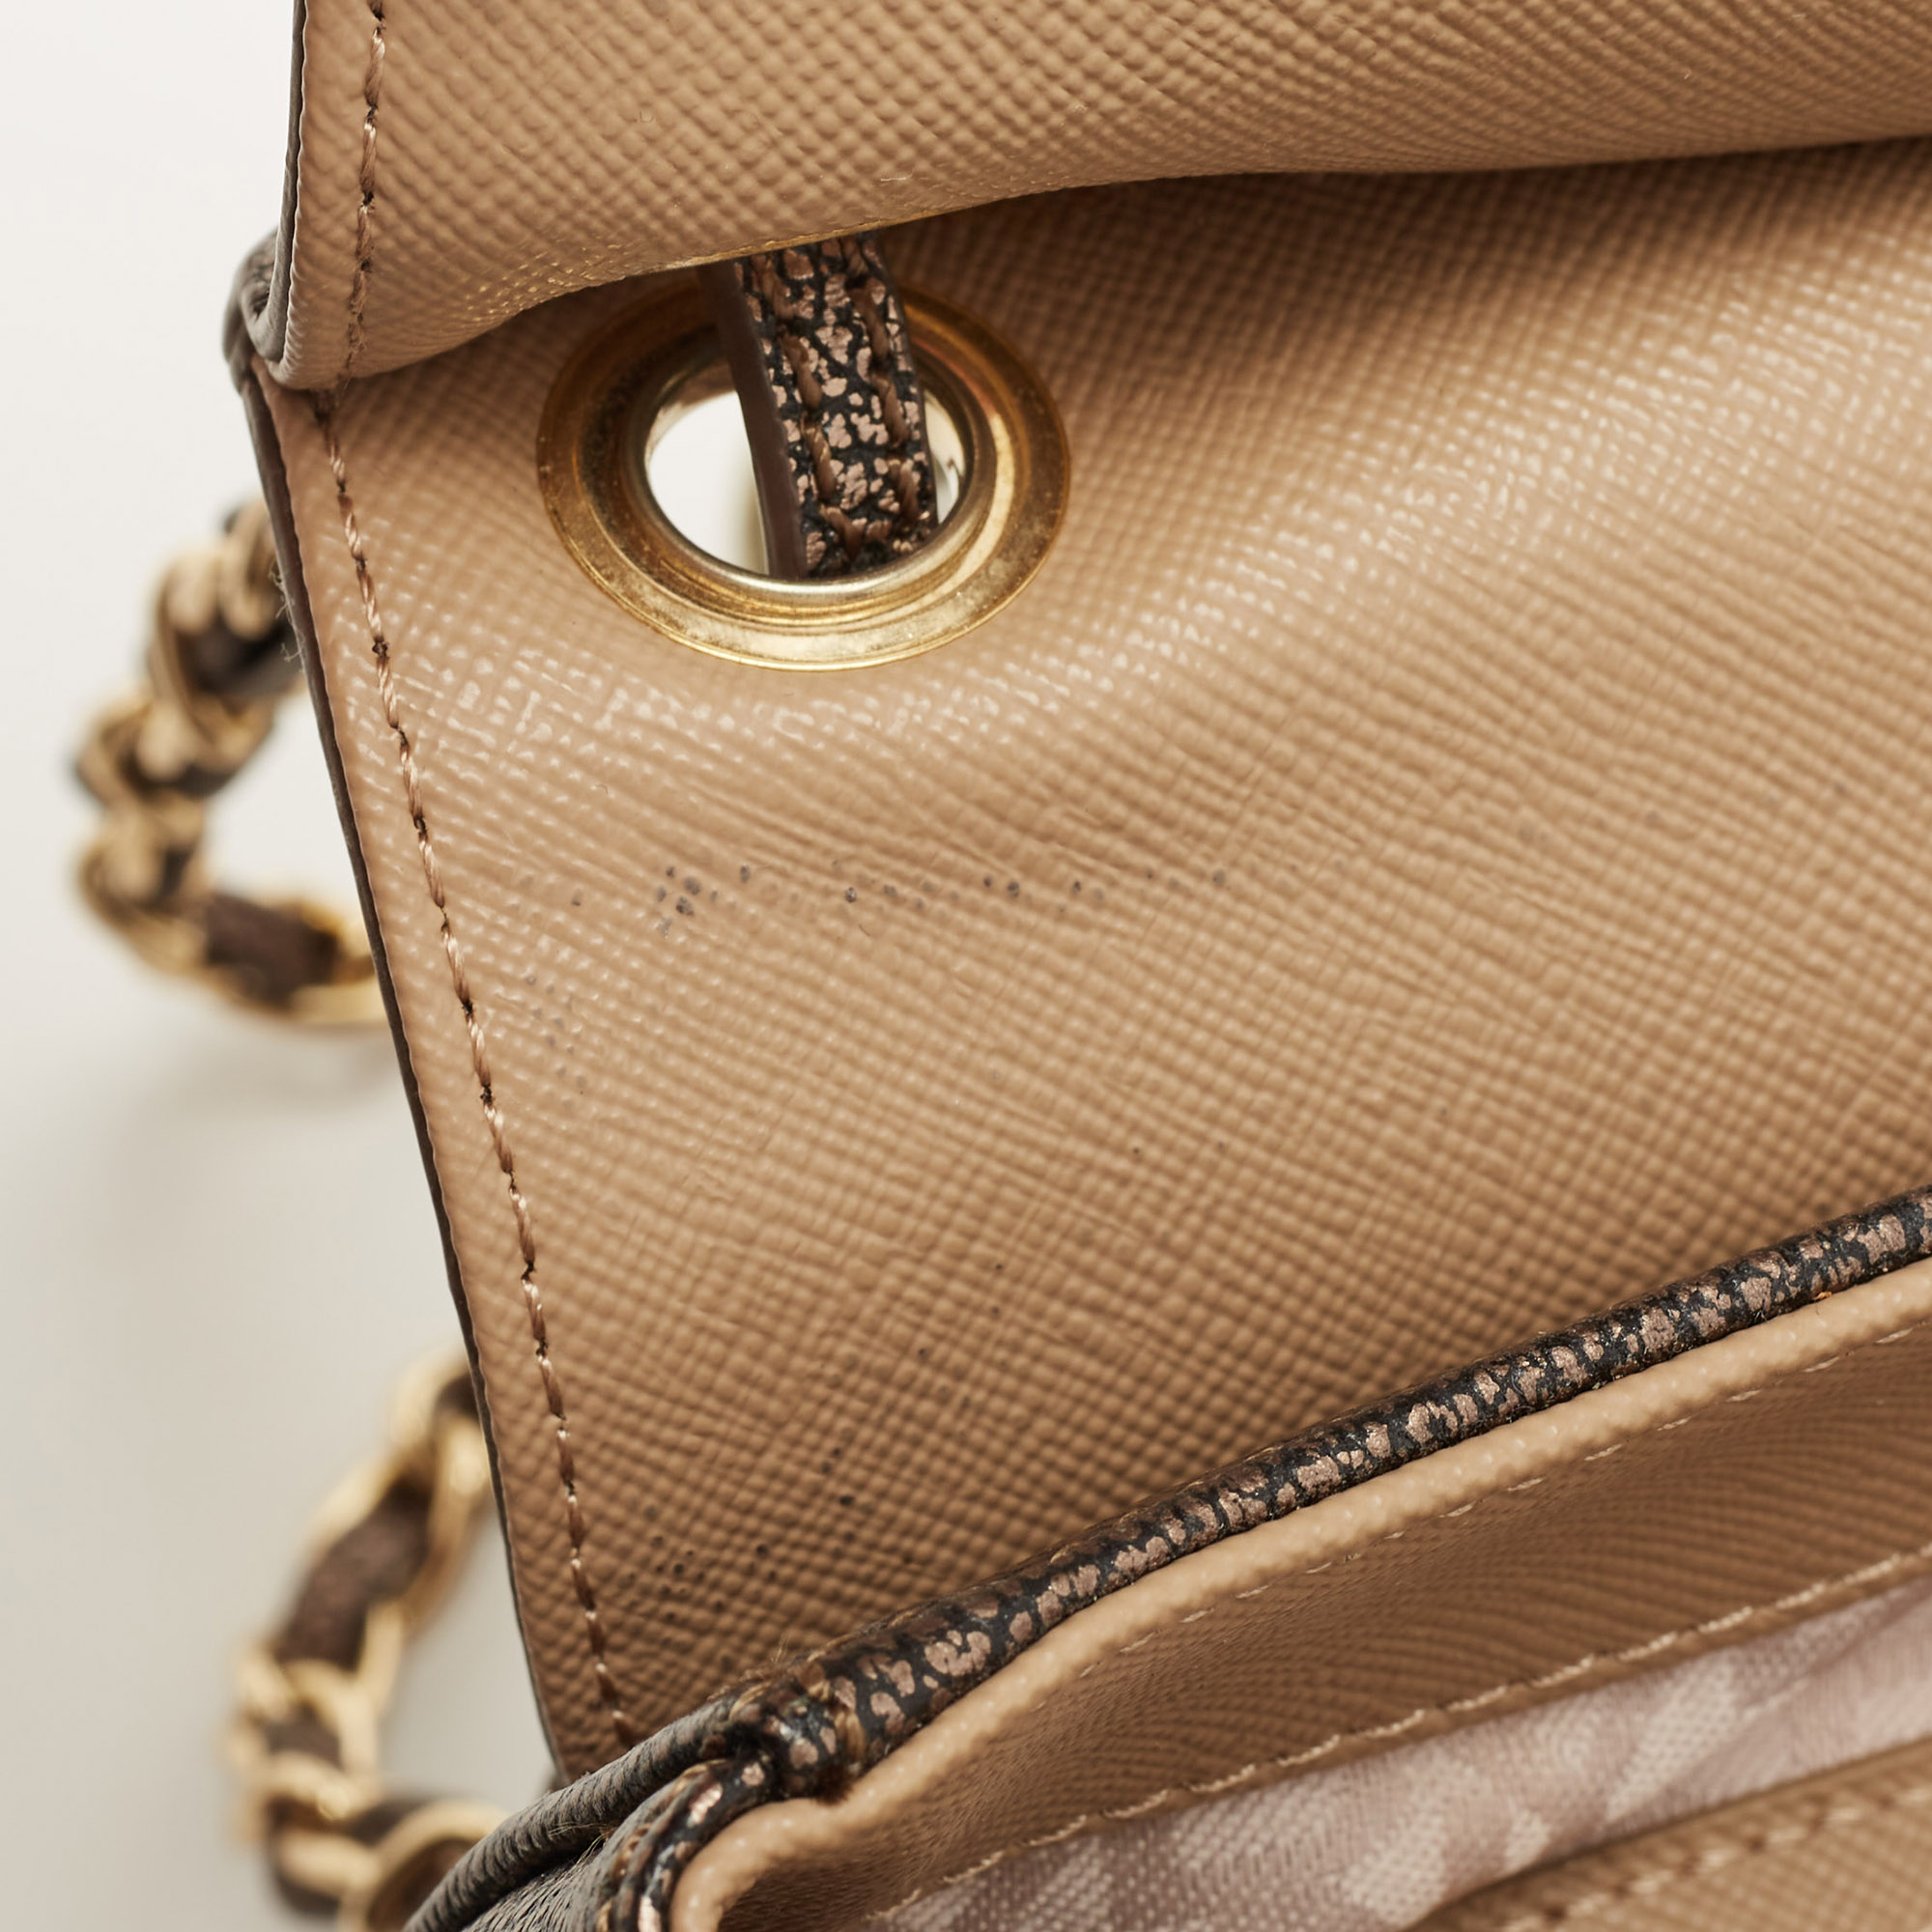 DKNY Metallic Textured Leather Logo Shoulder Bag